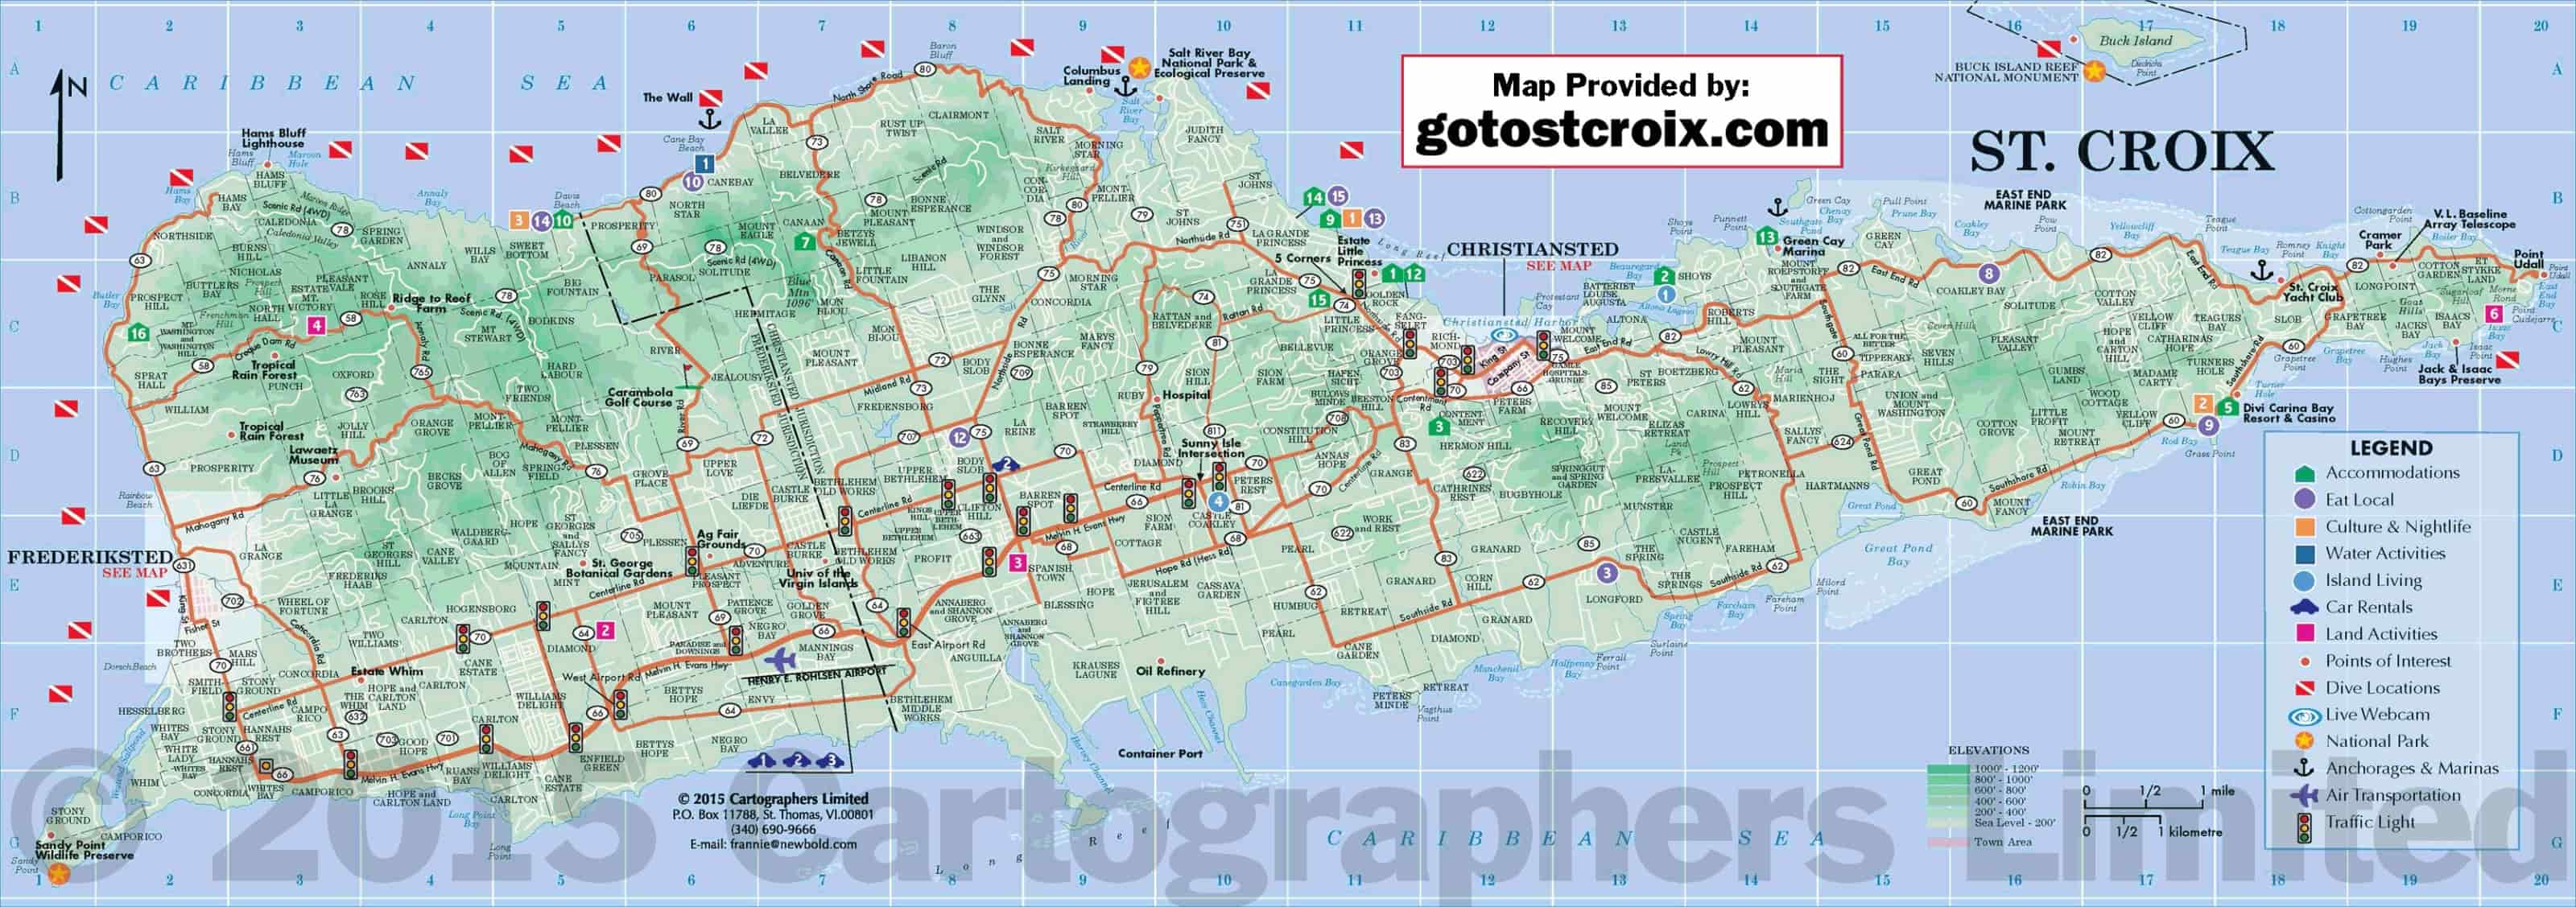 St Croix road map 2